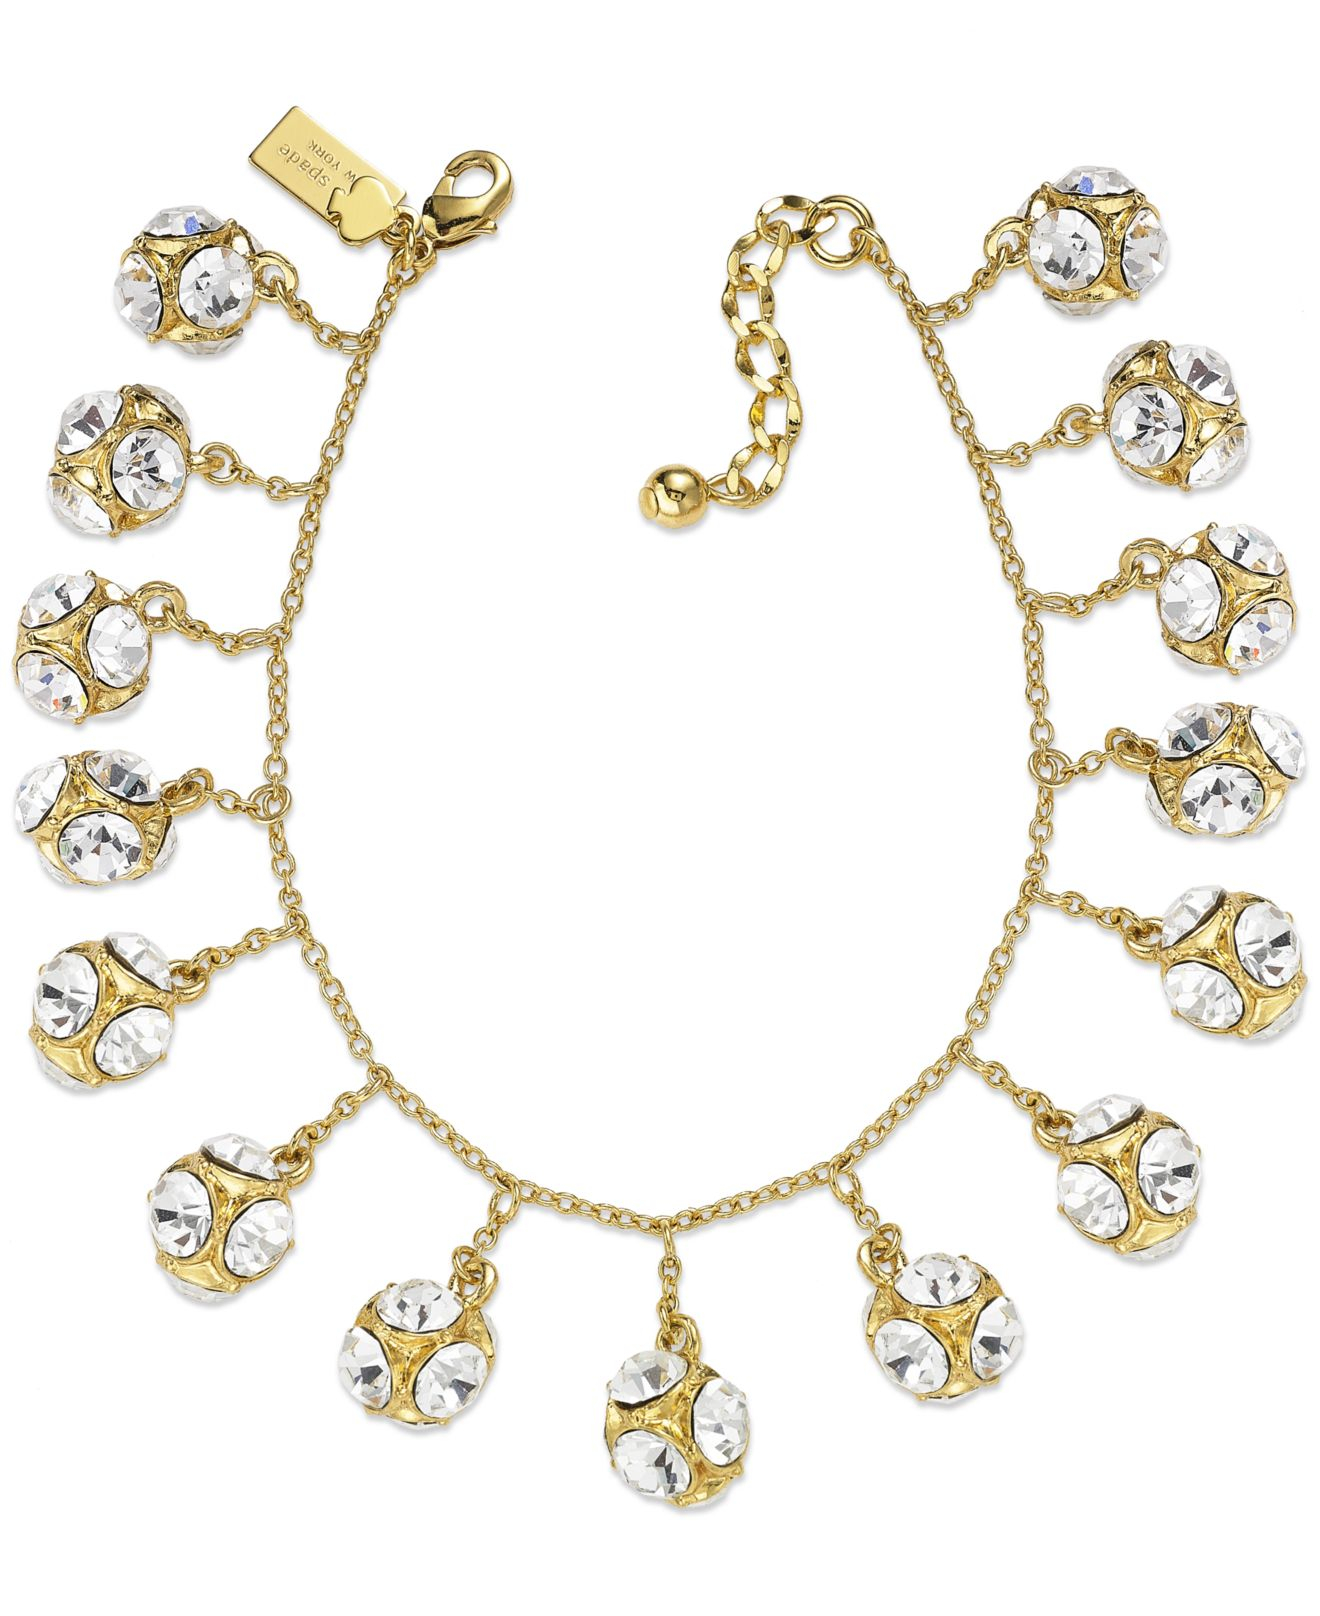 Kate Spade New York Goldtone Crystal Ball Charm Bracelet - Lyst